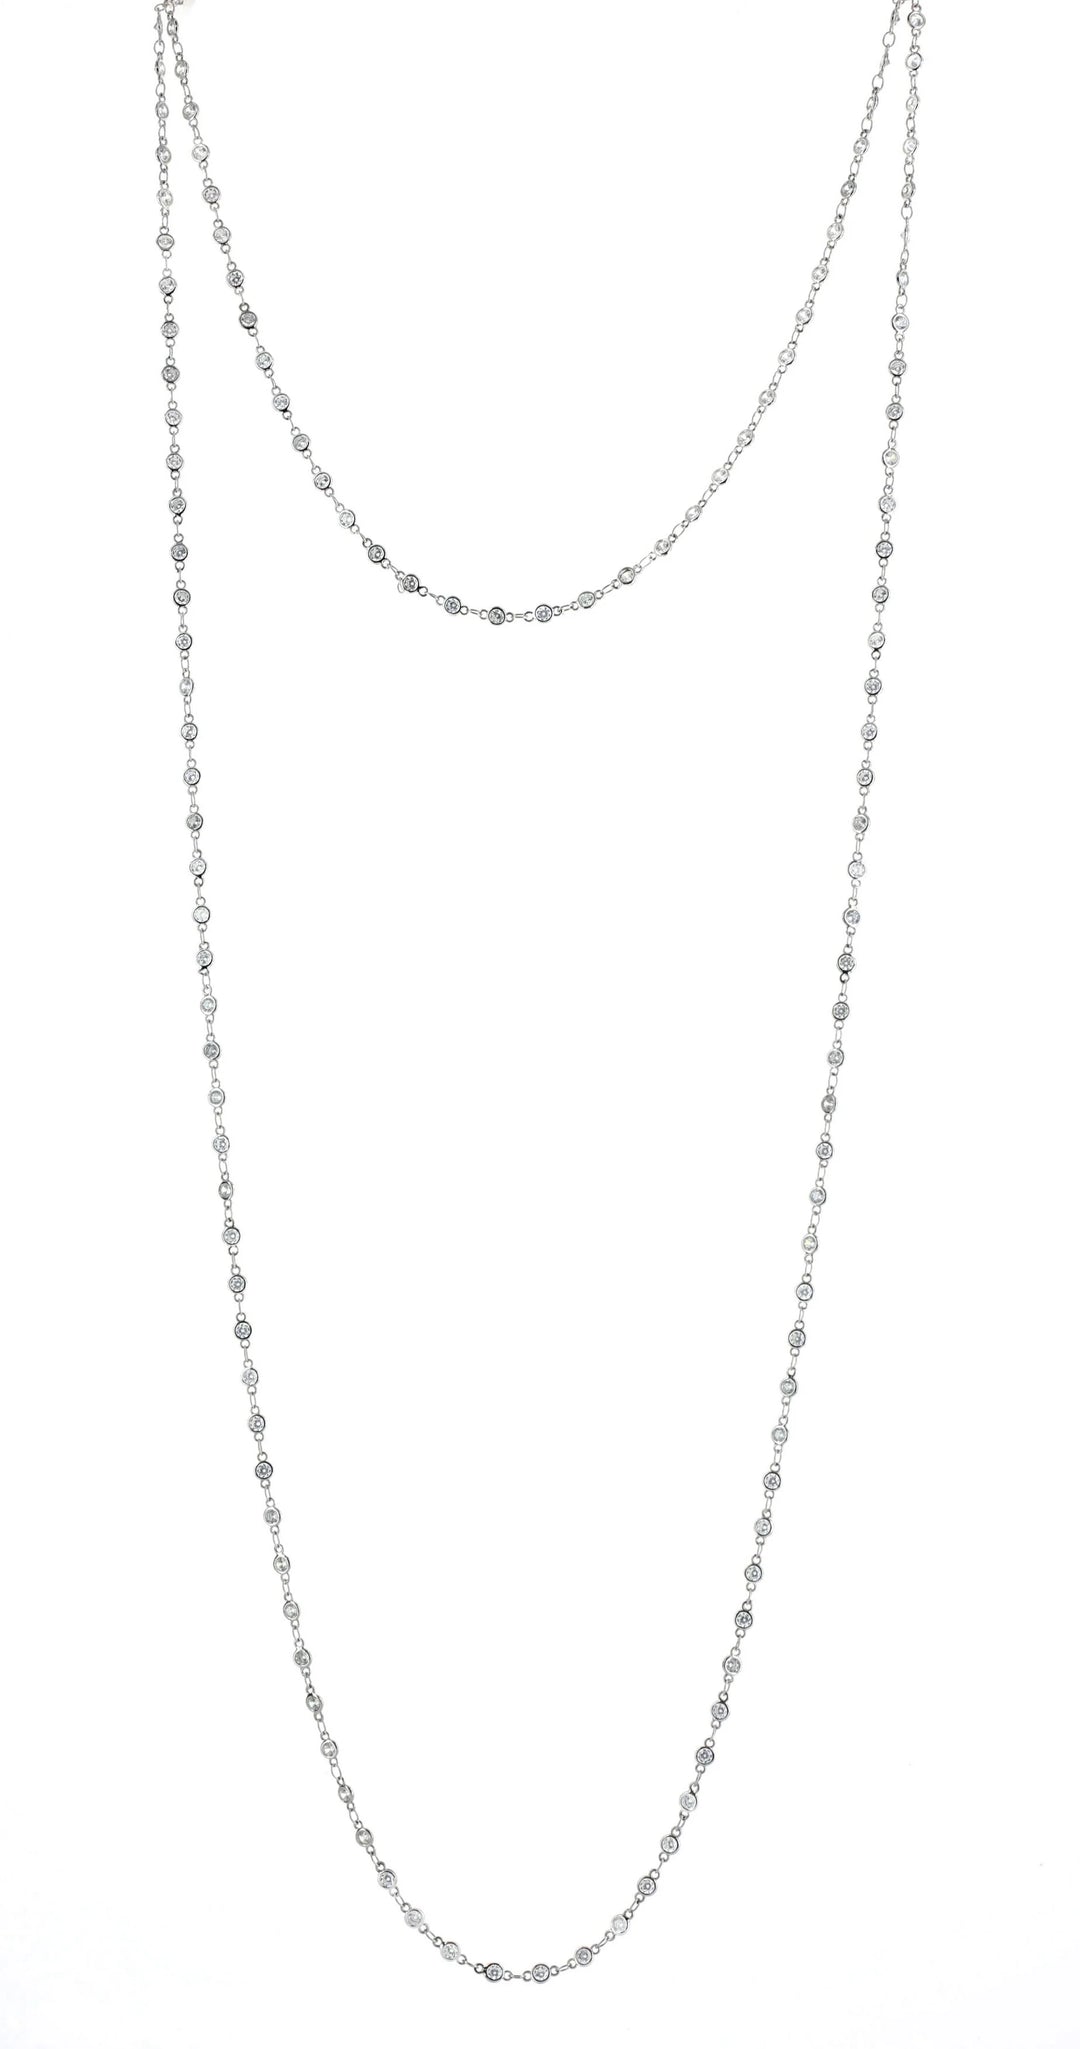 60" Super Long 4mm CZ Chain Necklace, Silver